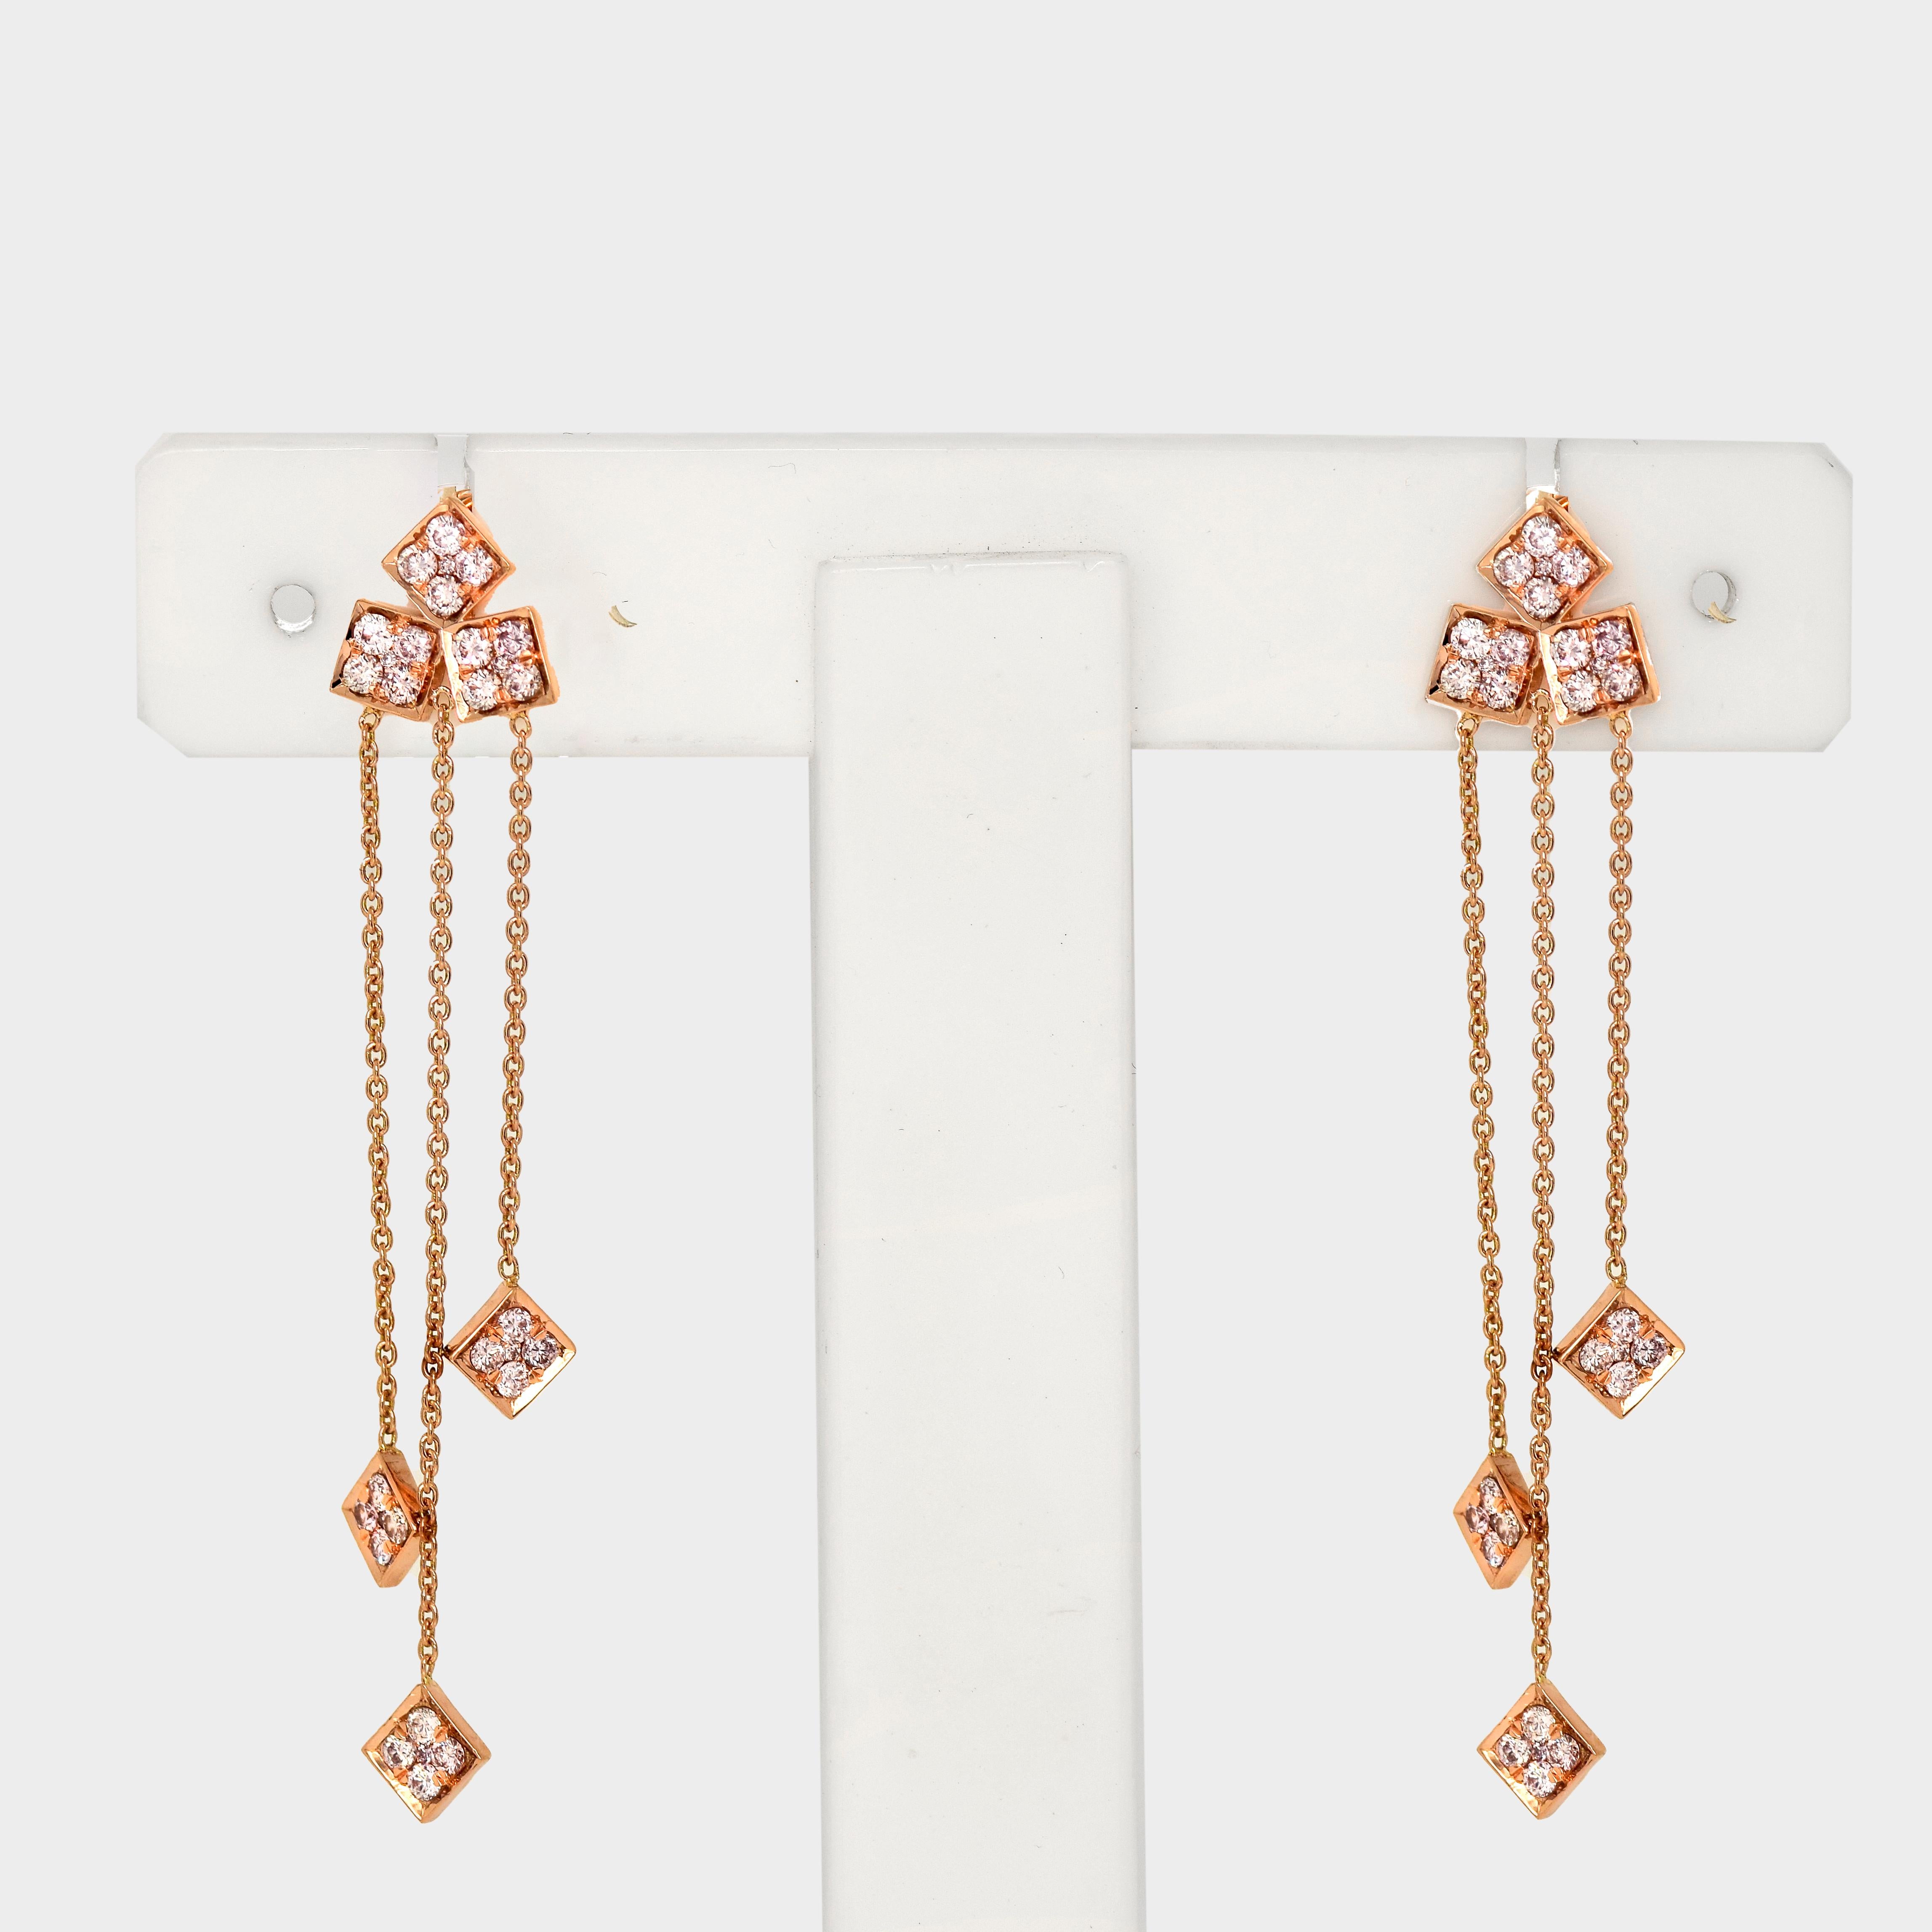 Round Cut IGI 14K 1.33 ct Natural Pink Diamonds Art Deco Design Stud Earrings For Sale